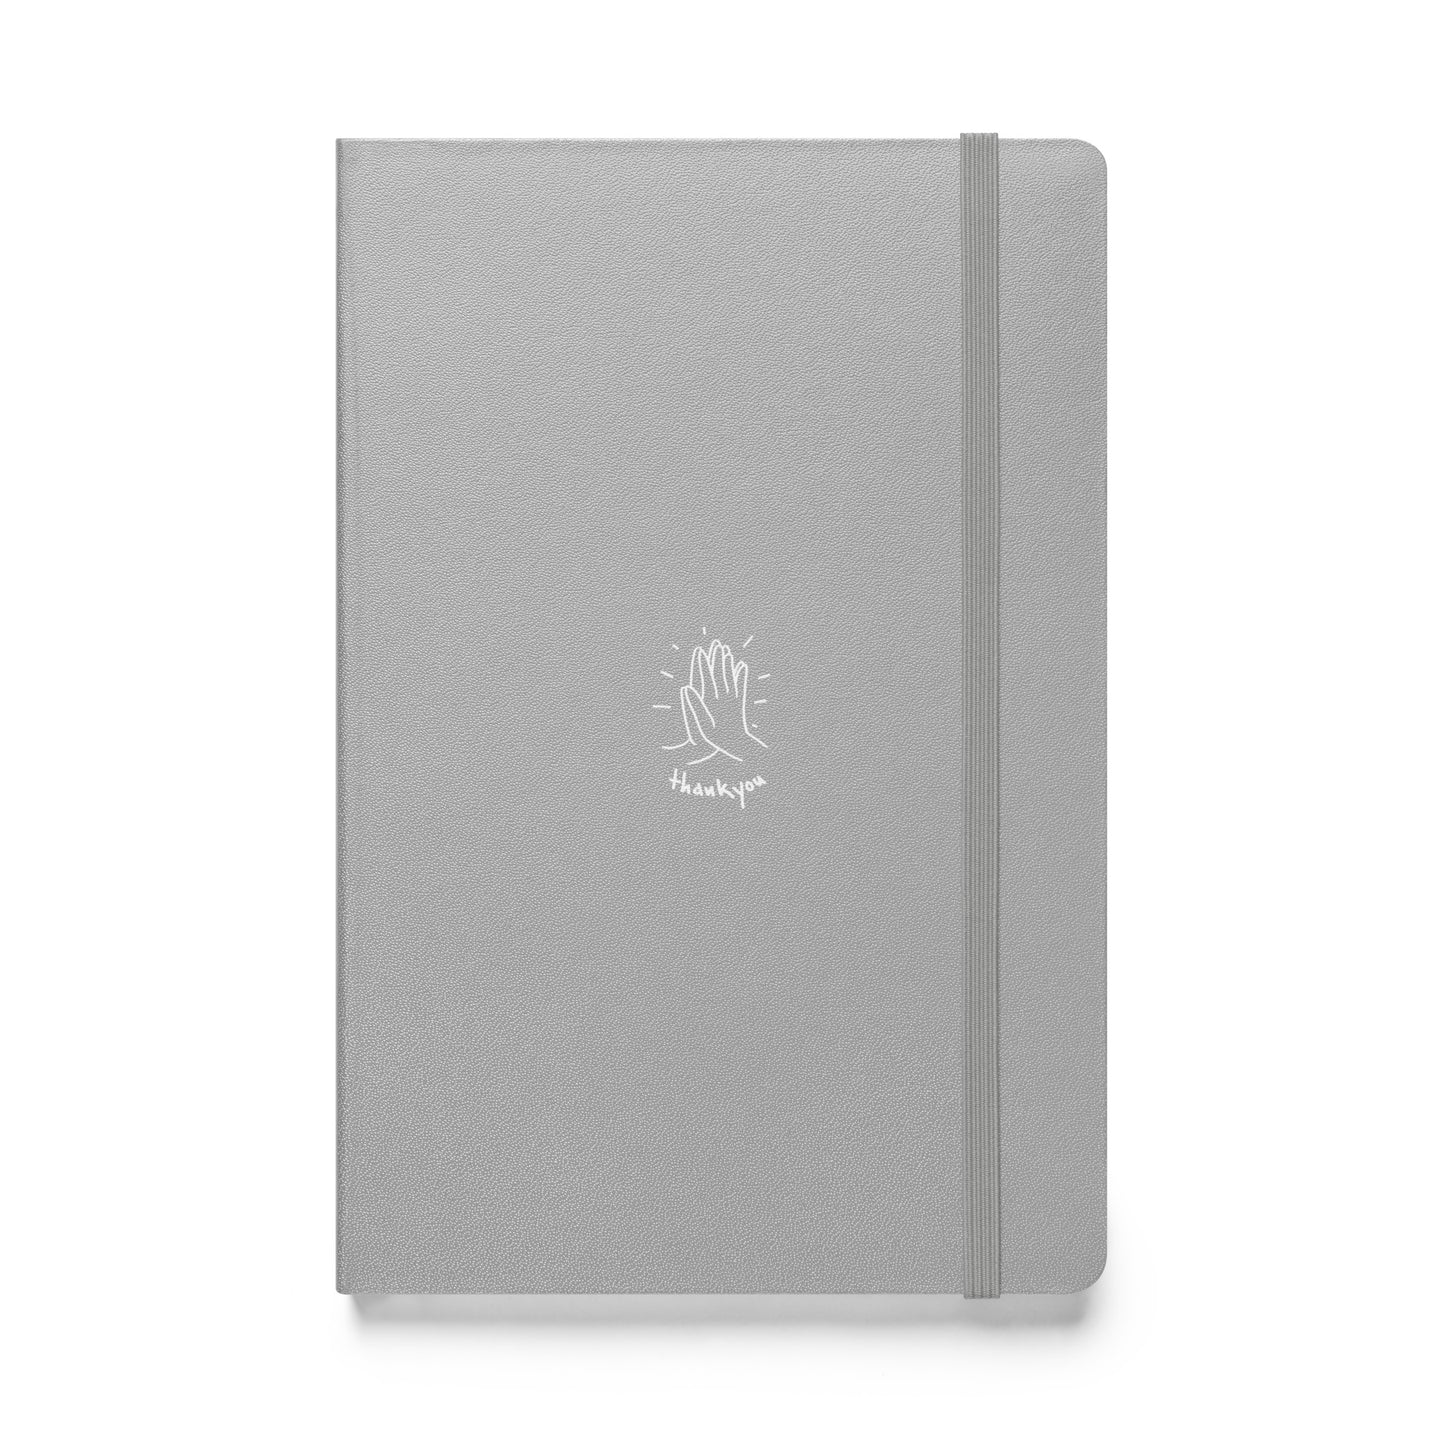 The Hi-Five Notebook